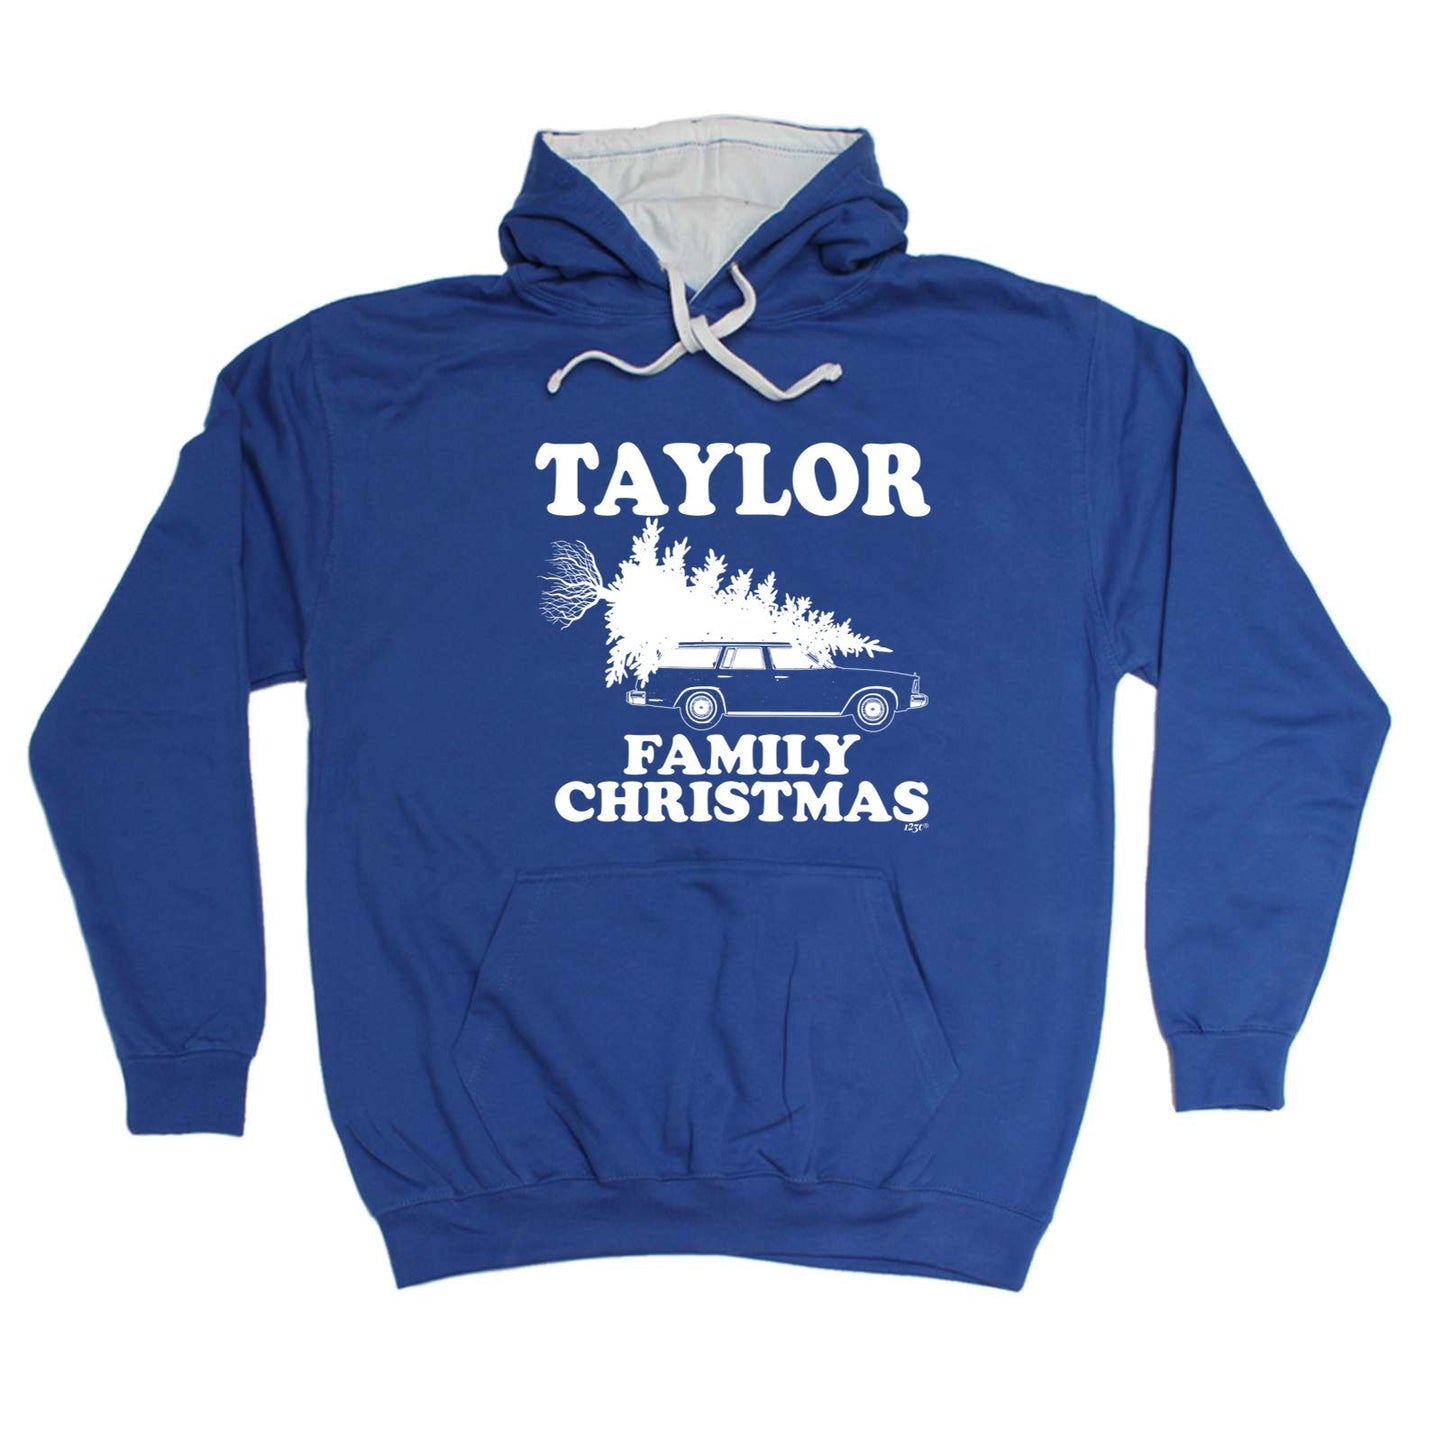 Family Christmas Taylor - Xmas Novelty Hoodies Hoodie